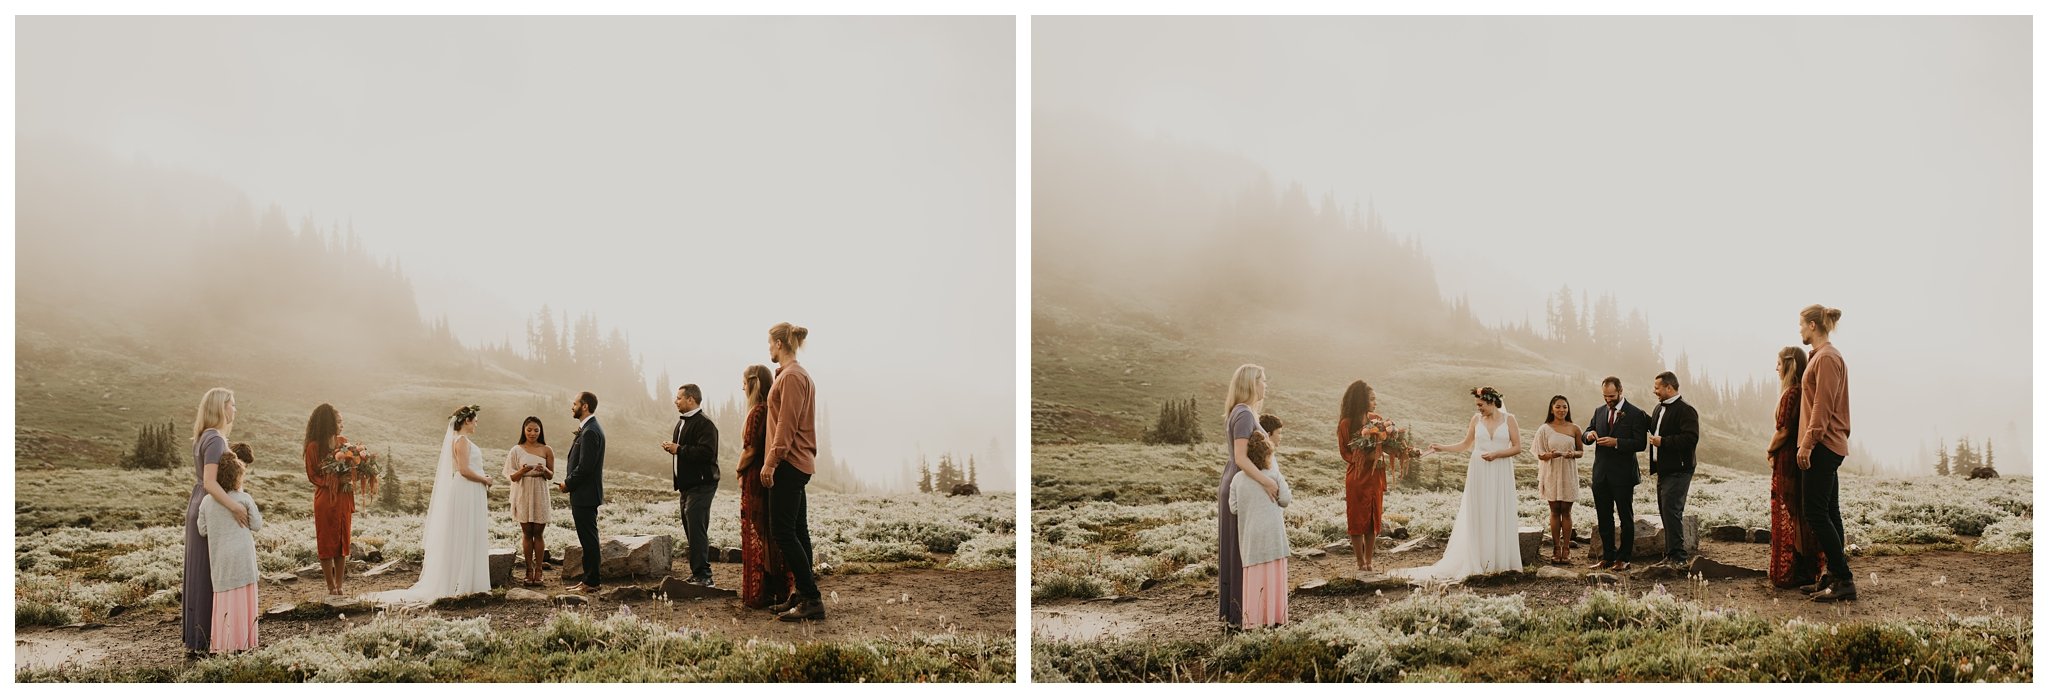 Sarah Gabe Elopement - Mt Rainier, WA - Boise Idaho Family Photographer - Kamra Fuller Photography_0041.jpg